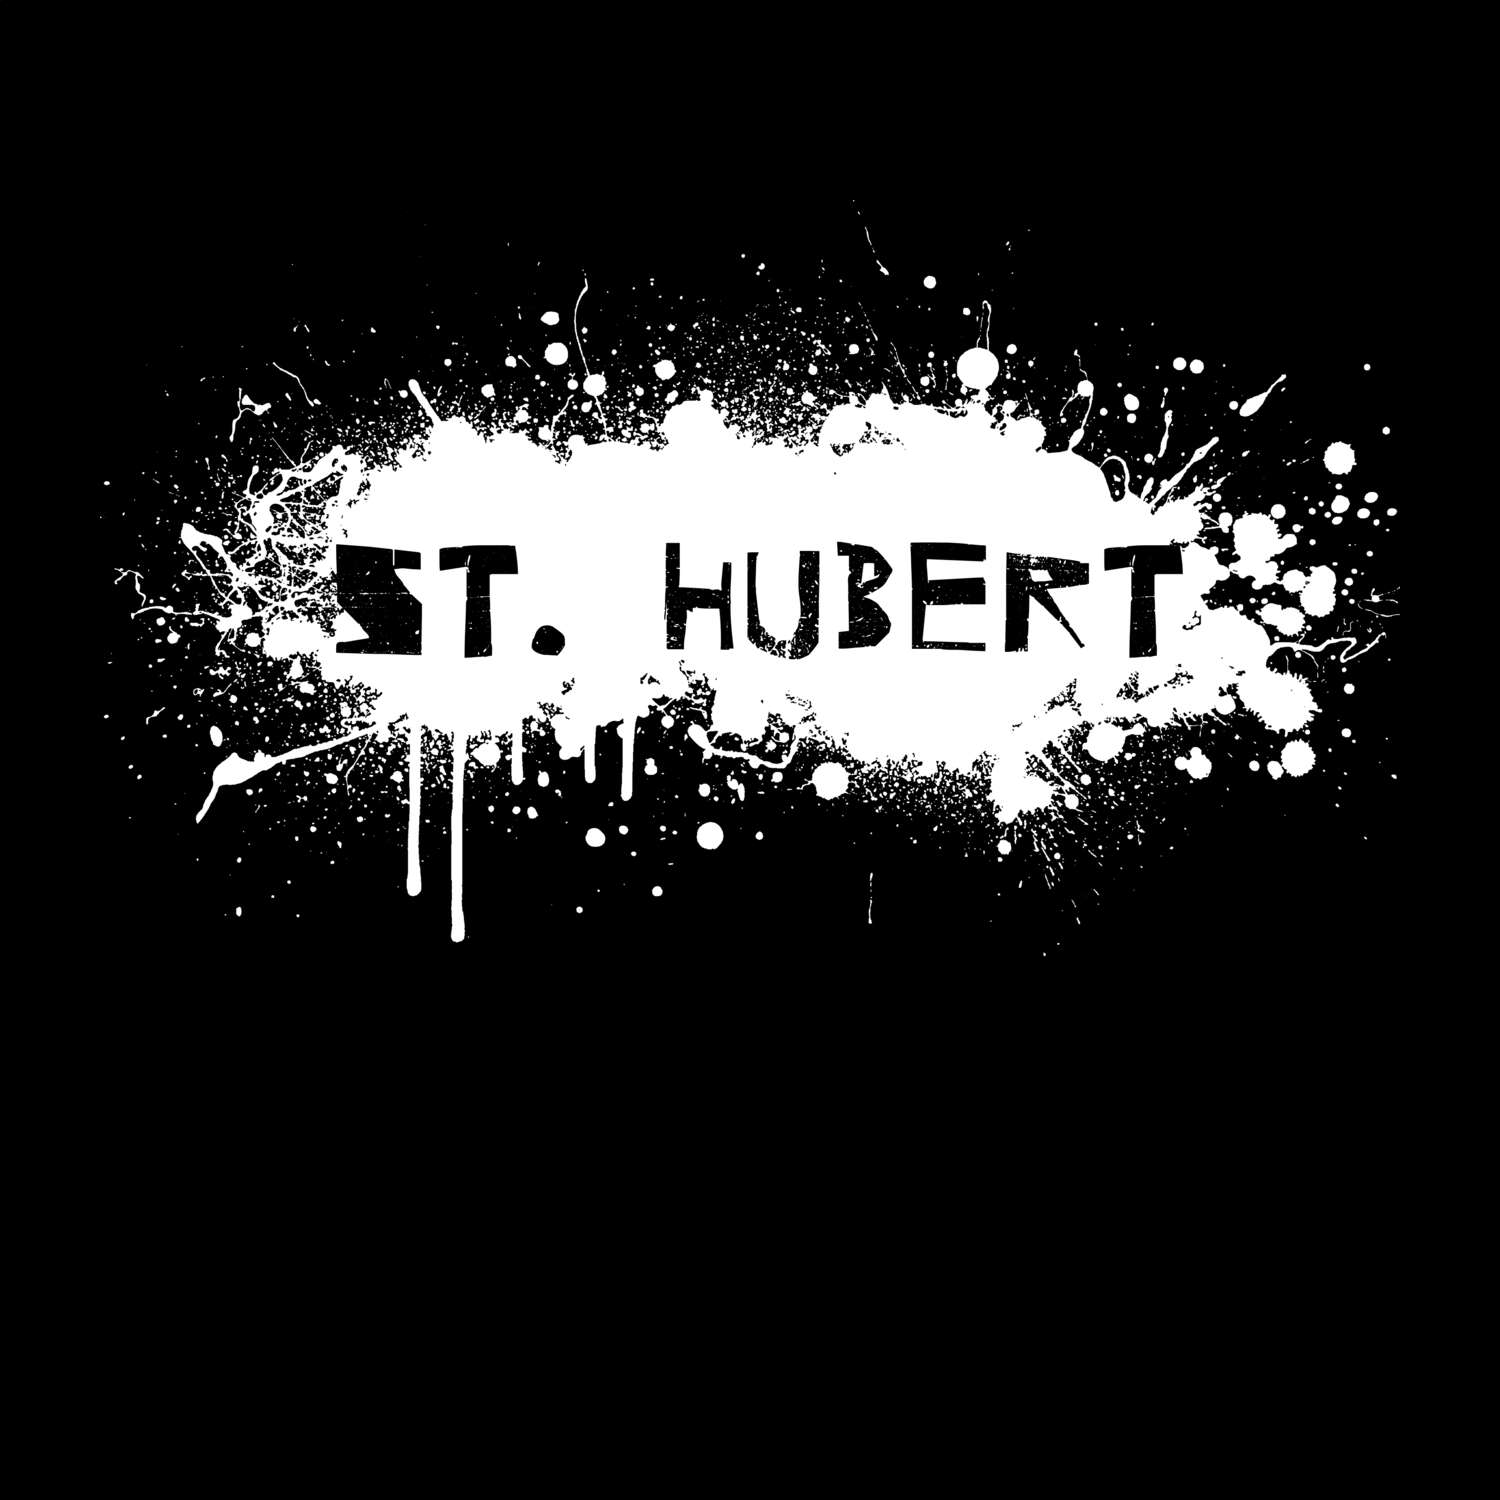 St. Hubert T-Shirt »Paint Splash Punk«